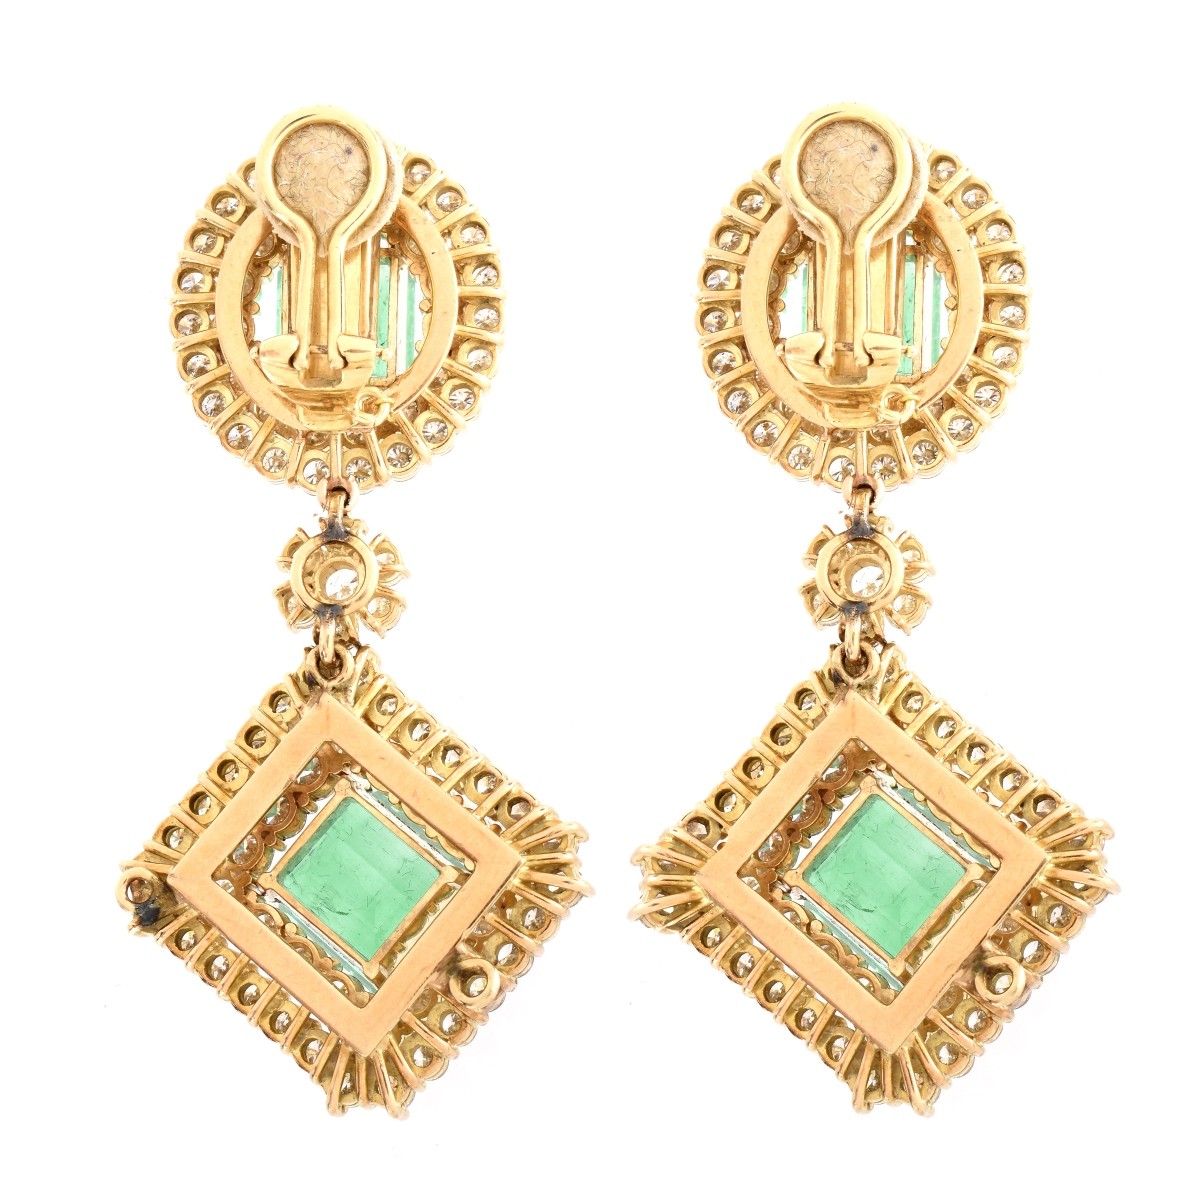 Important Emerald, Diamond and 18K Earrings